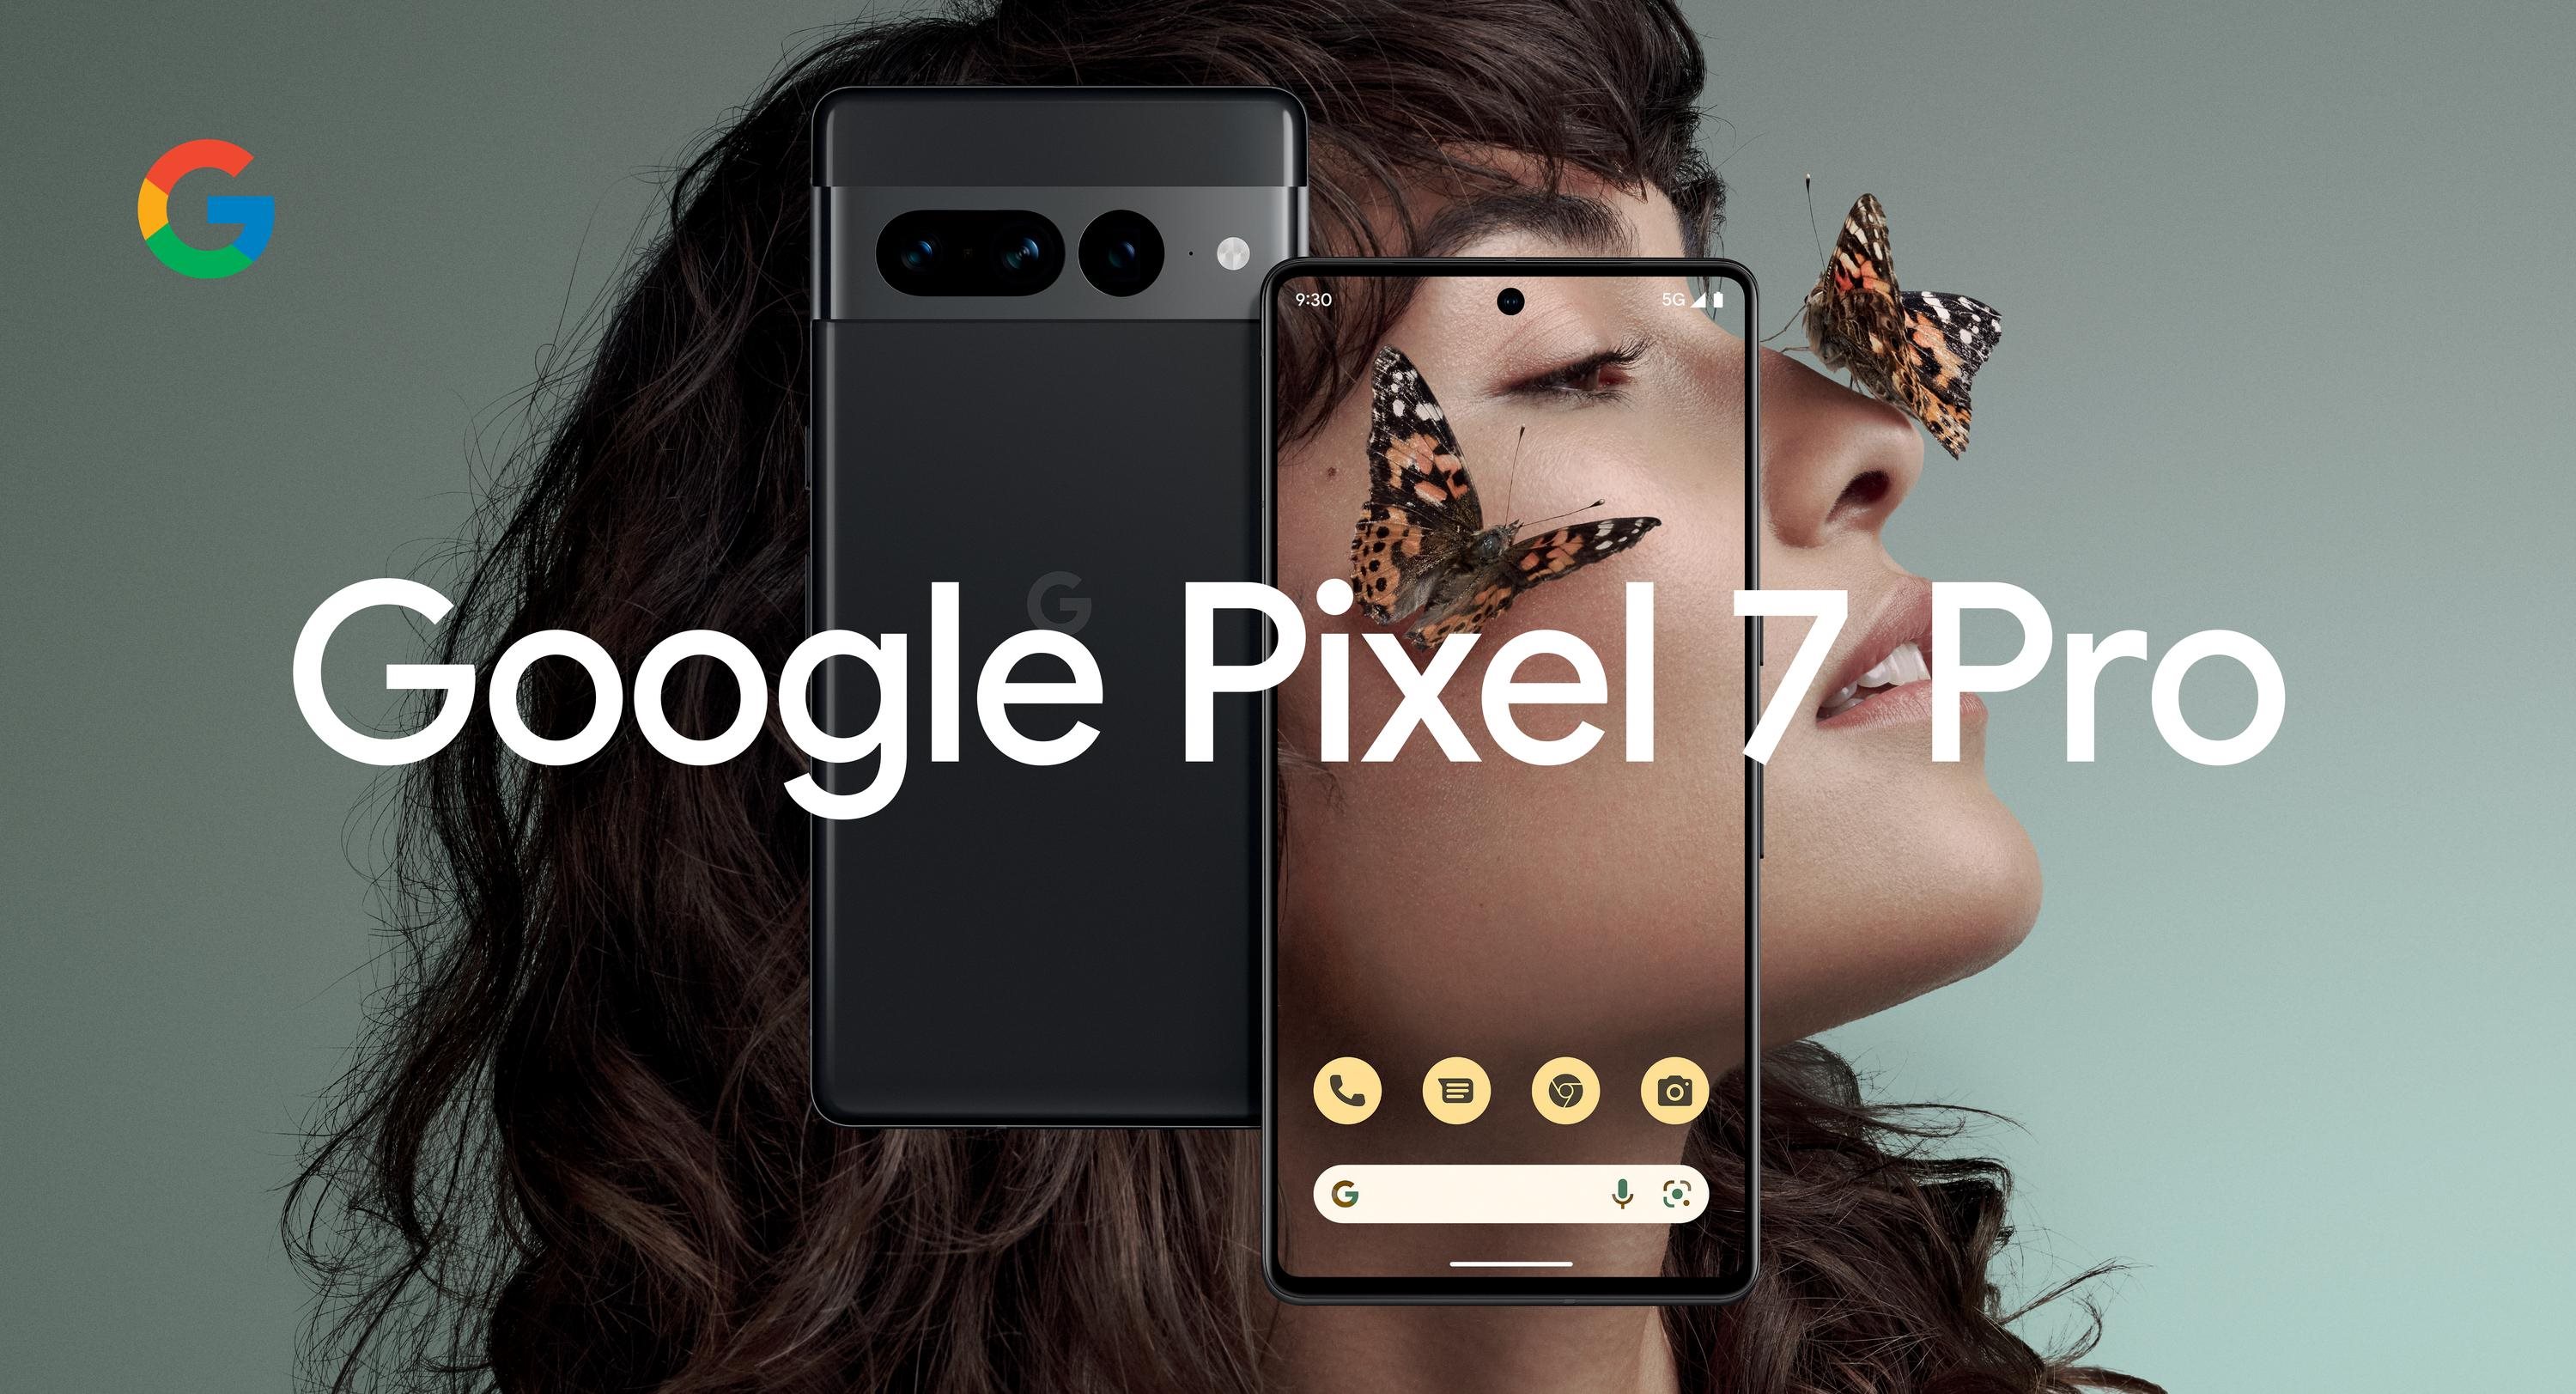 Buy SIM Free Google Pixel 7 Pro 5G 256GB Mobile Phone - Obsidian